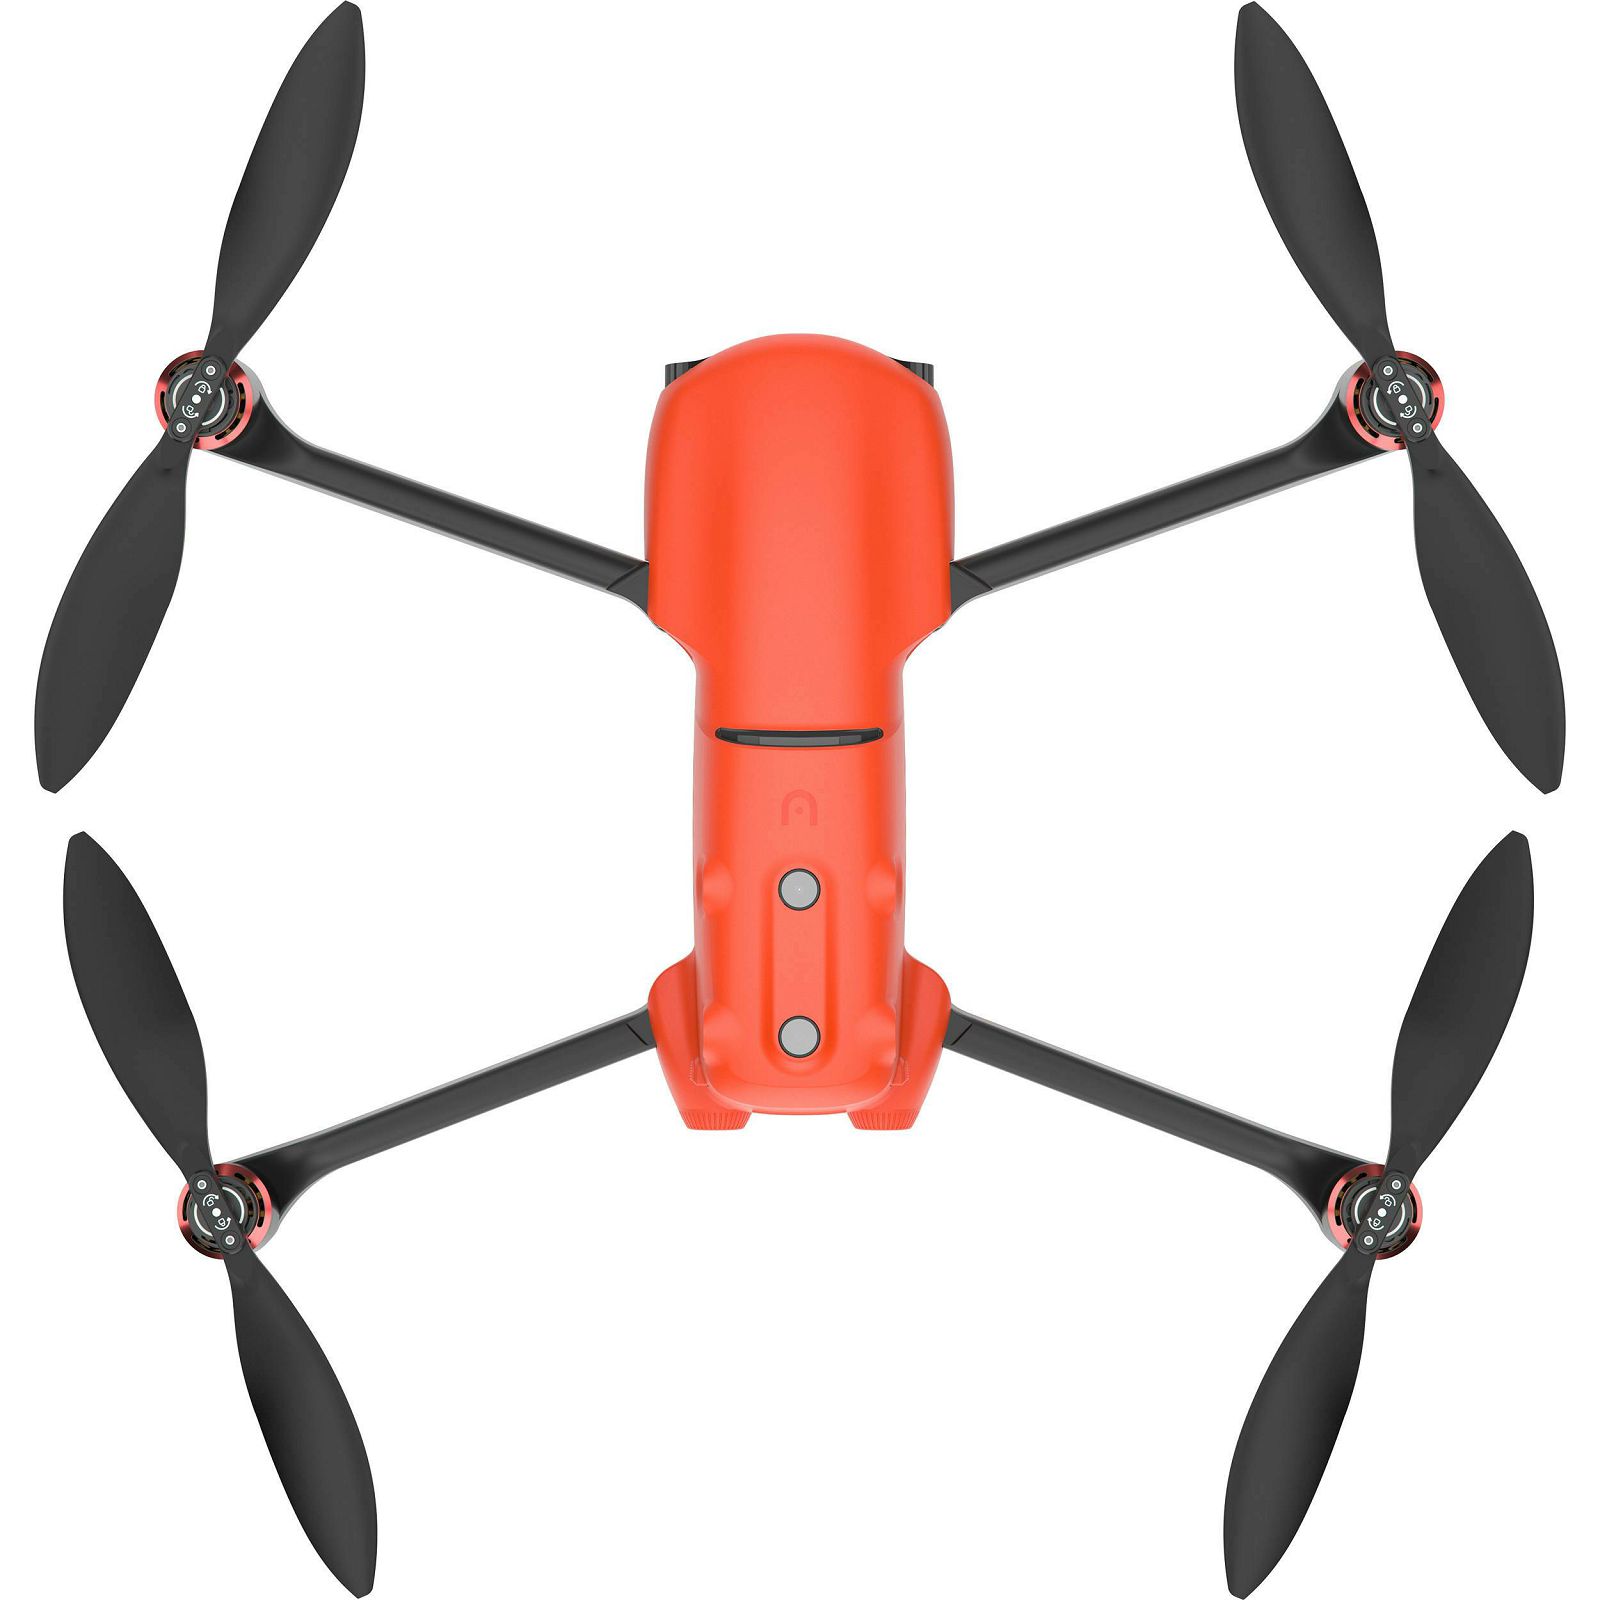 Autel EVO II Pro dron